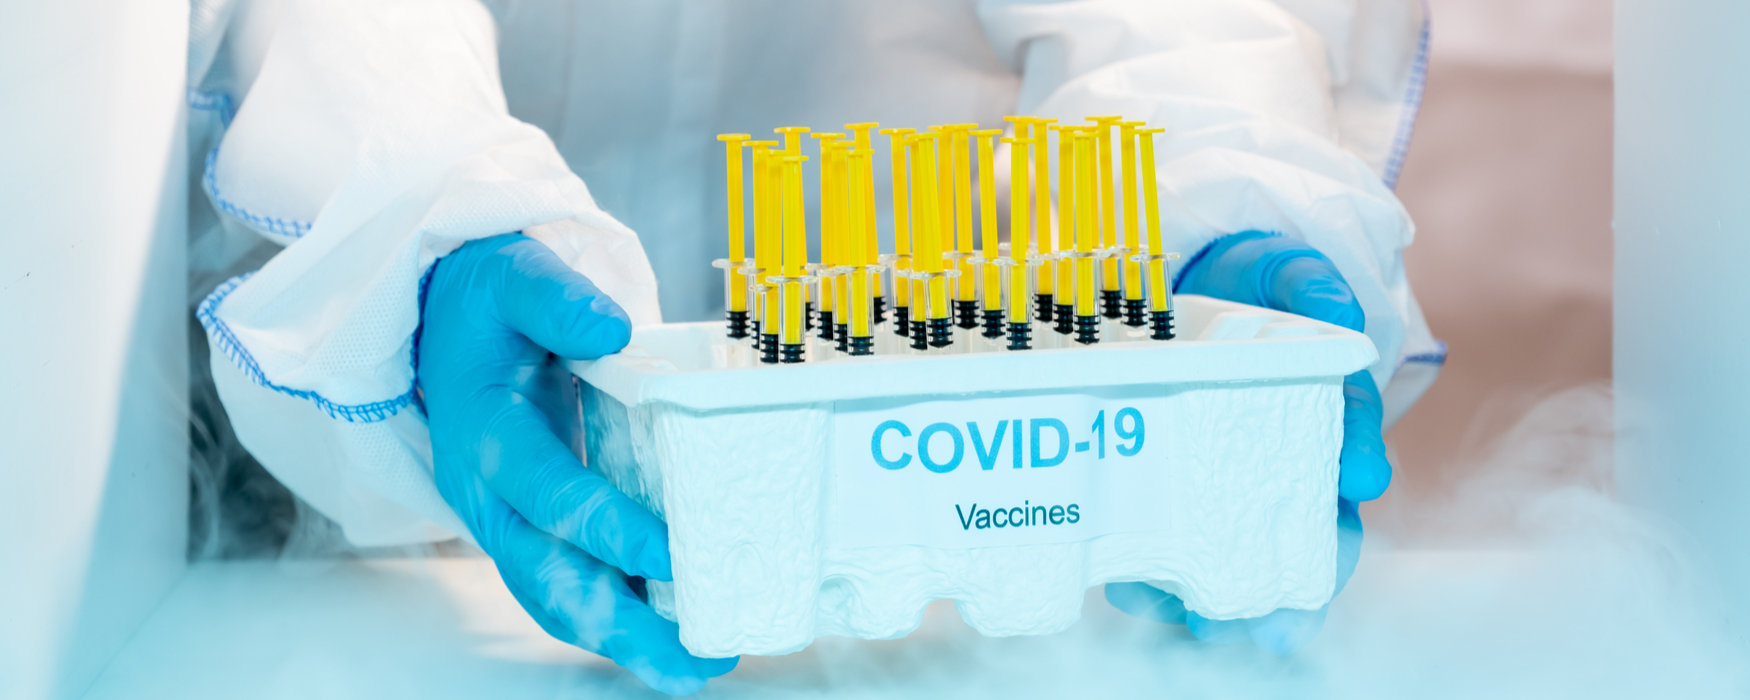 Florida covid vaccine freezers - covid 19 vaccine freezer - vaccine storage in Florida